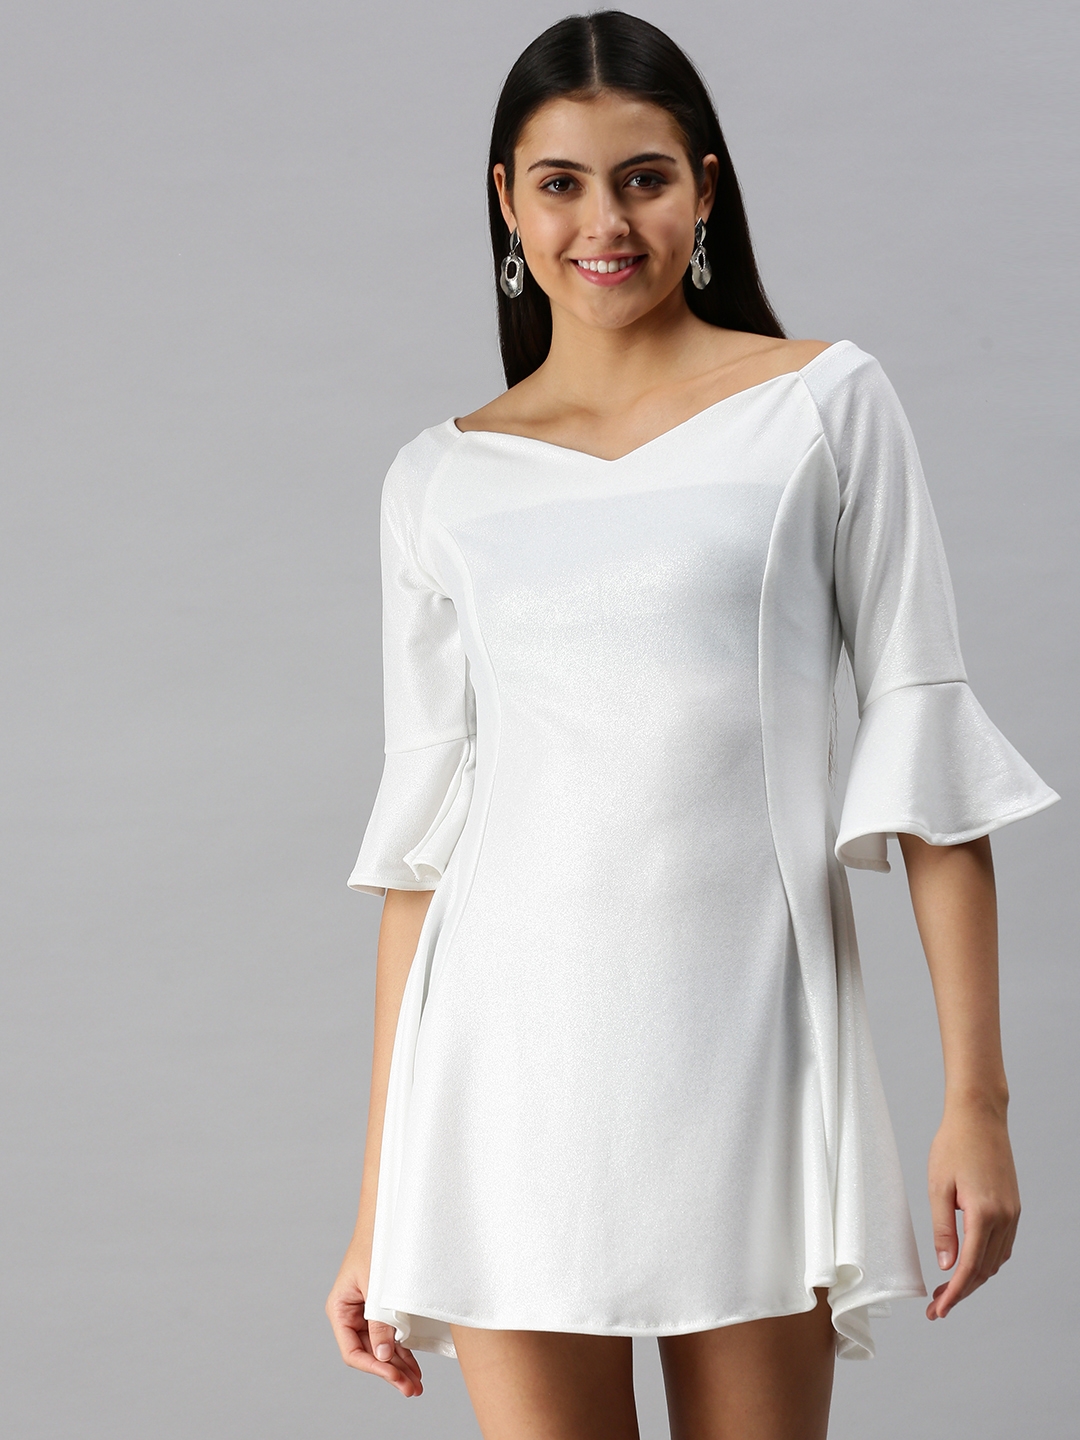 Showoff | SHOWOFF Women's Fit and Flare Off-Shoulder White Solid Dress 0